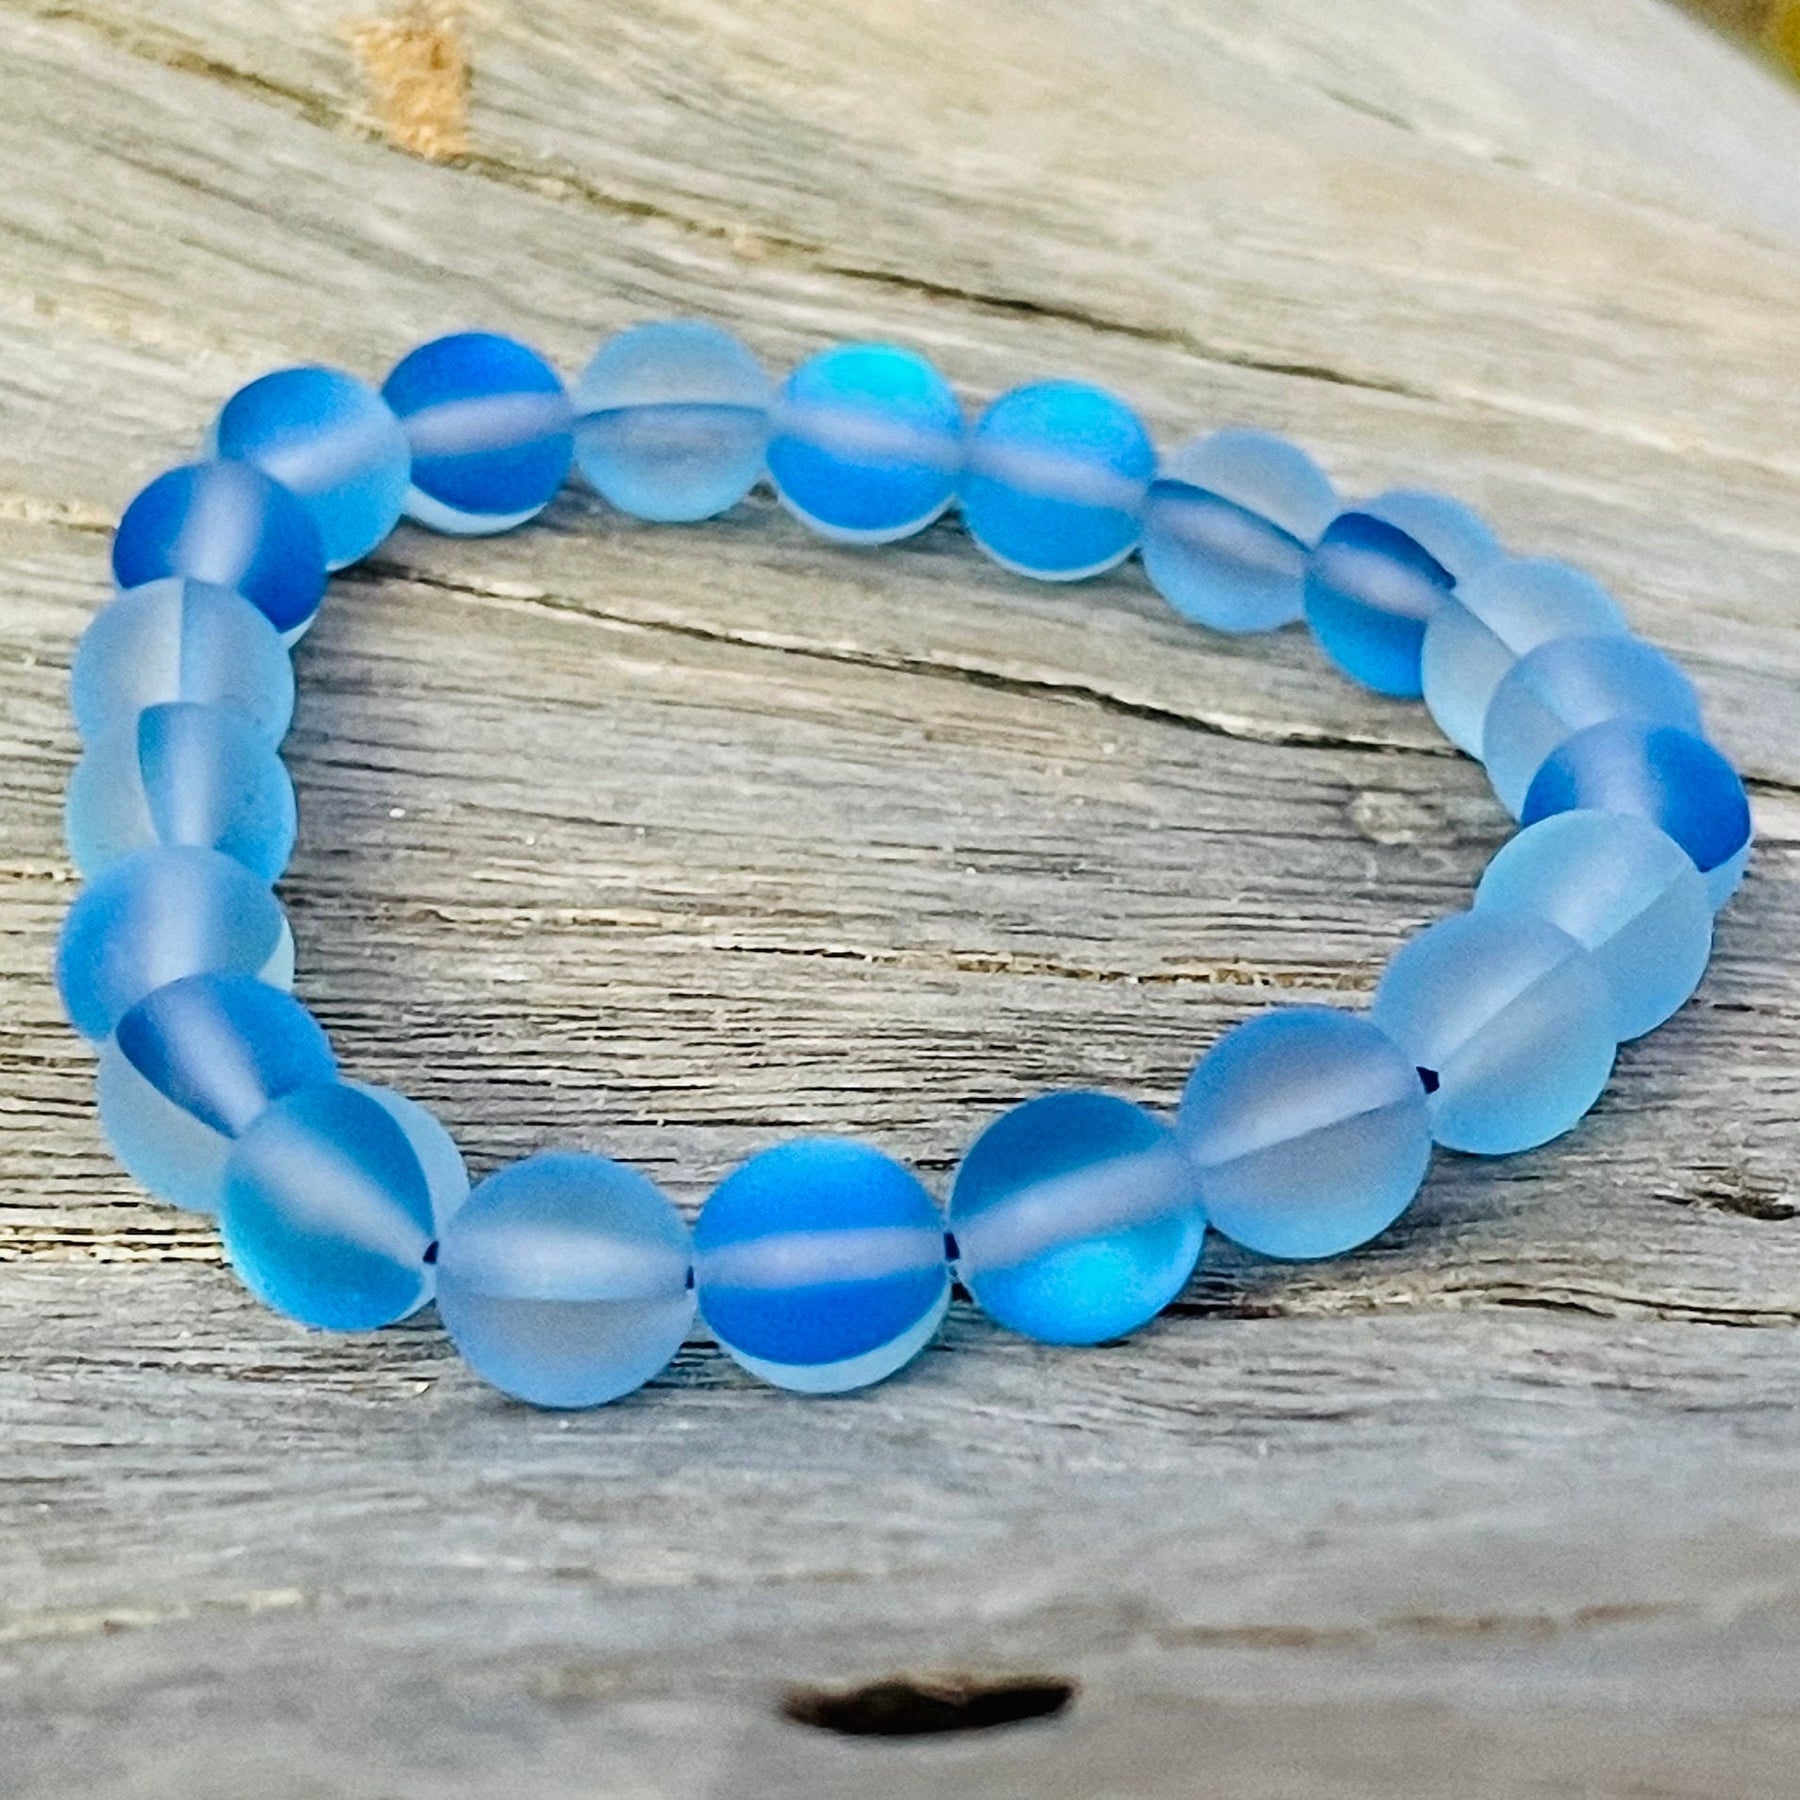 Wavy Preciosa Crystal Bracelet Kit - Blue Malibu from Lisa's Bead